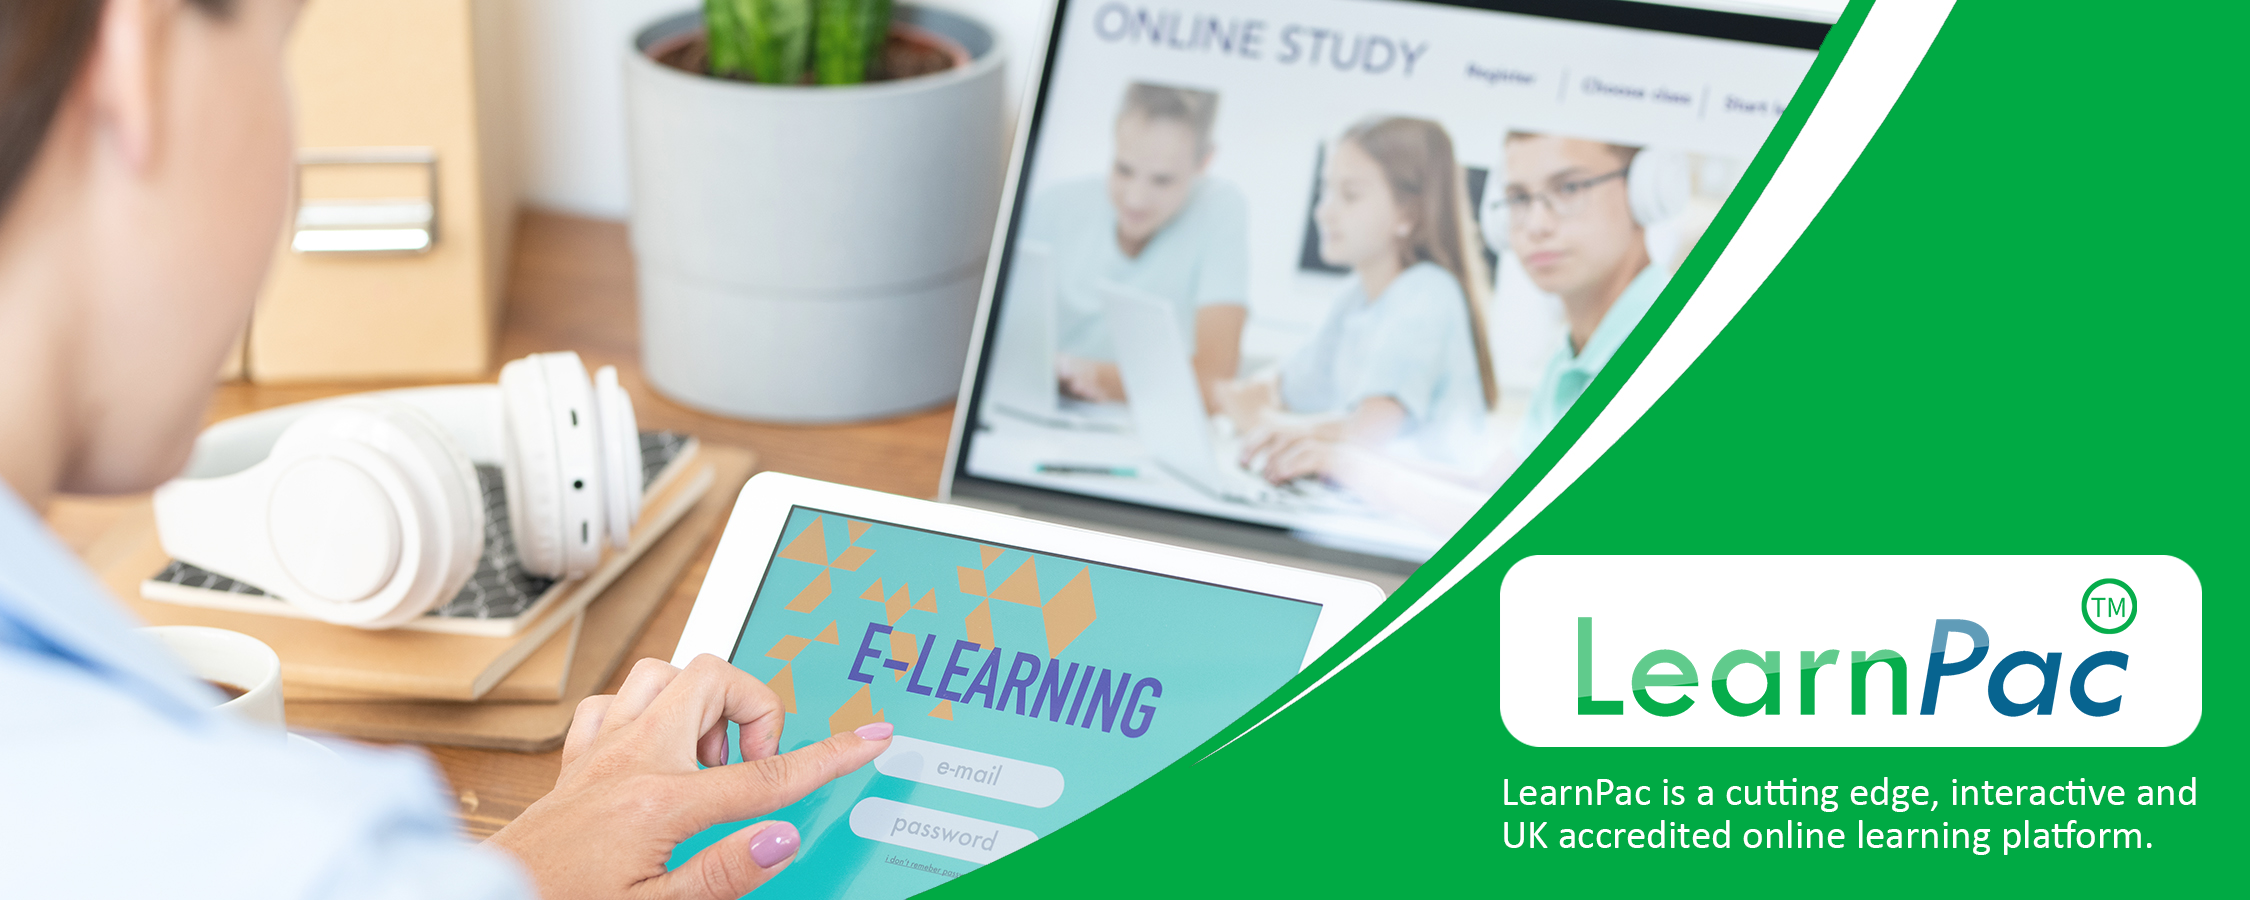 Work-Life Balance Training - Online Learning Courses - E-Learning Courses - LearnPac Systems UK -